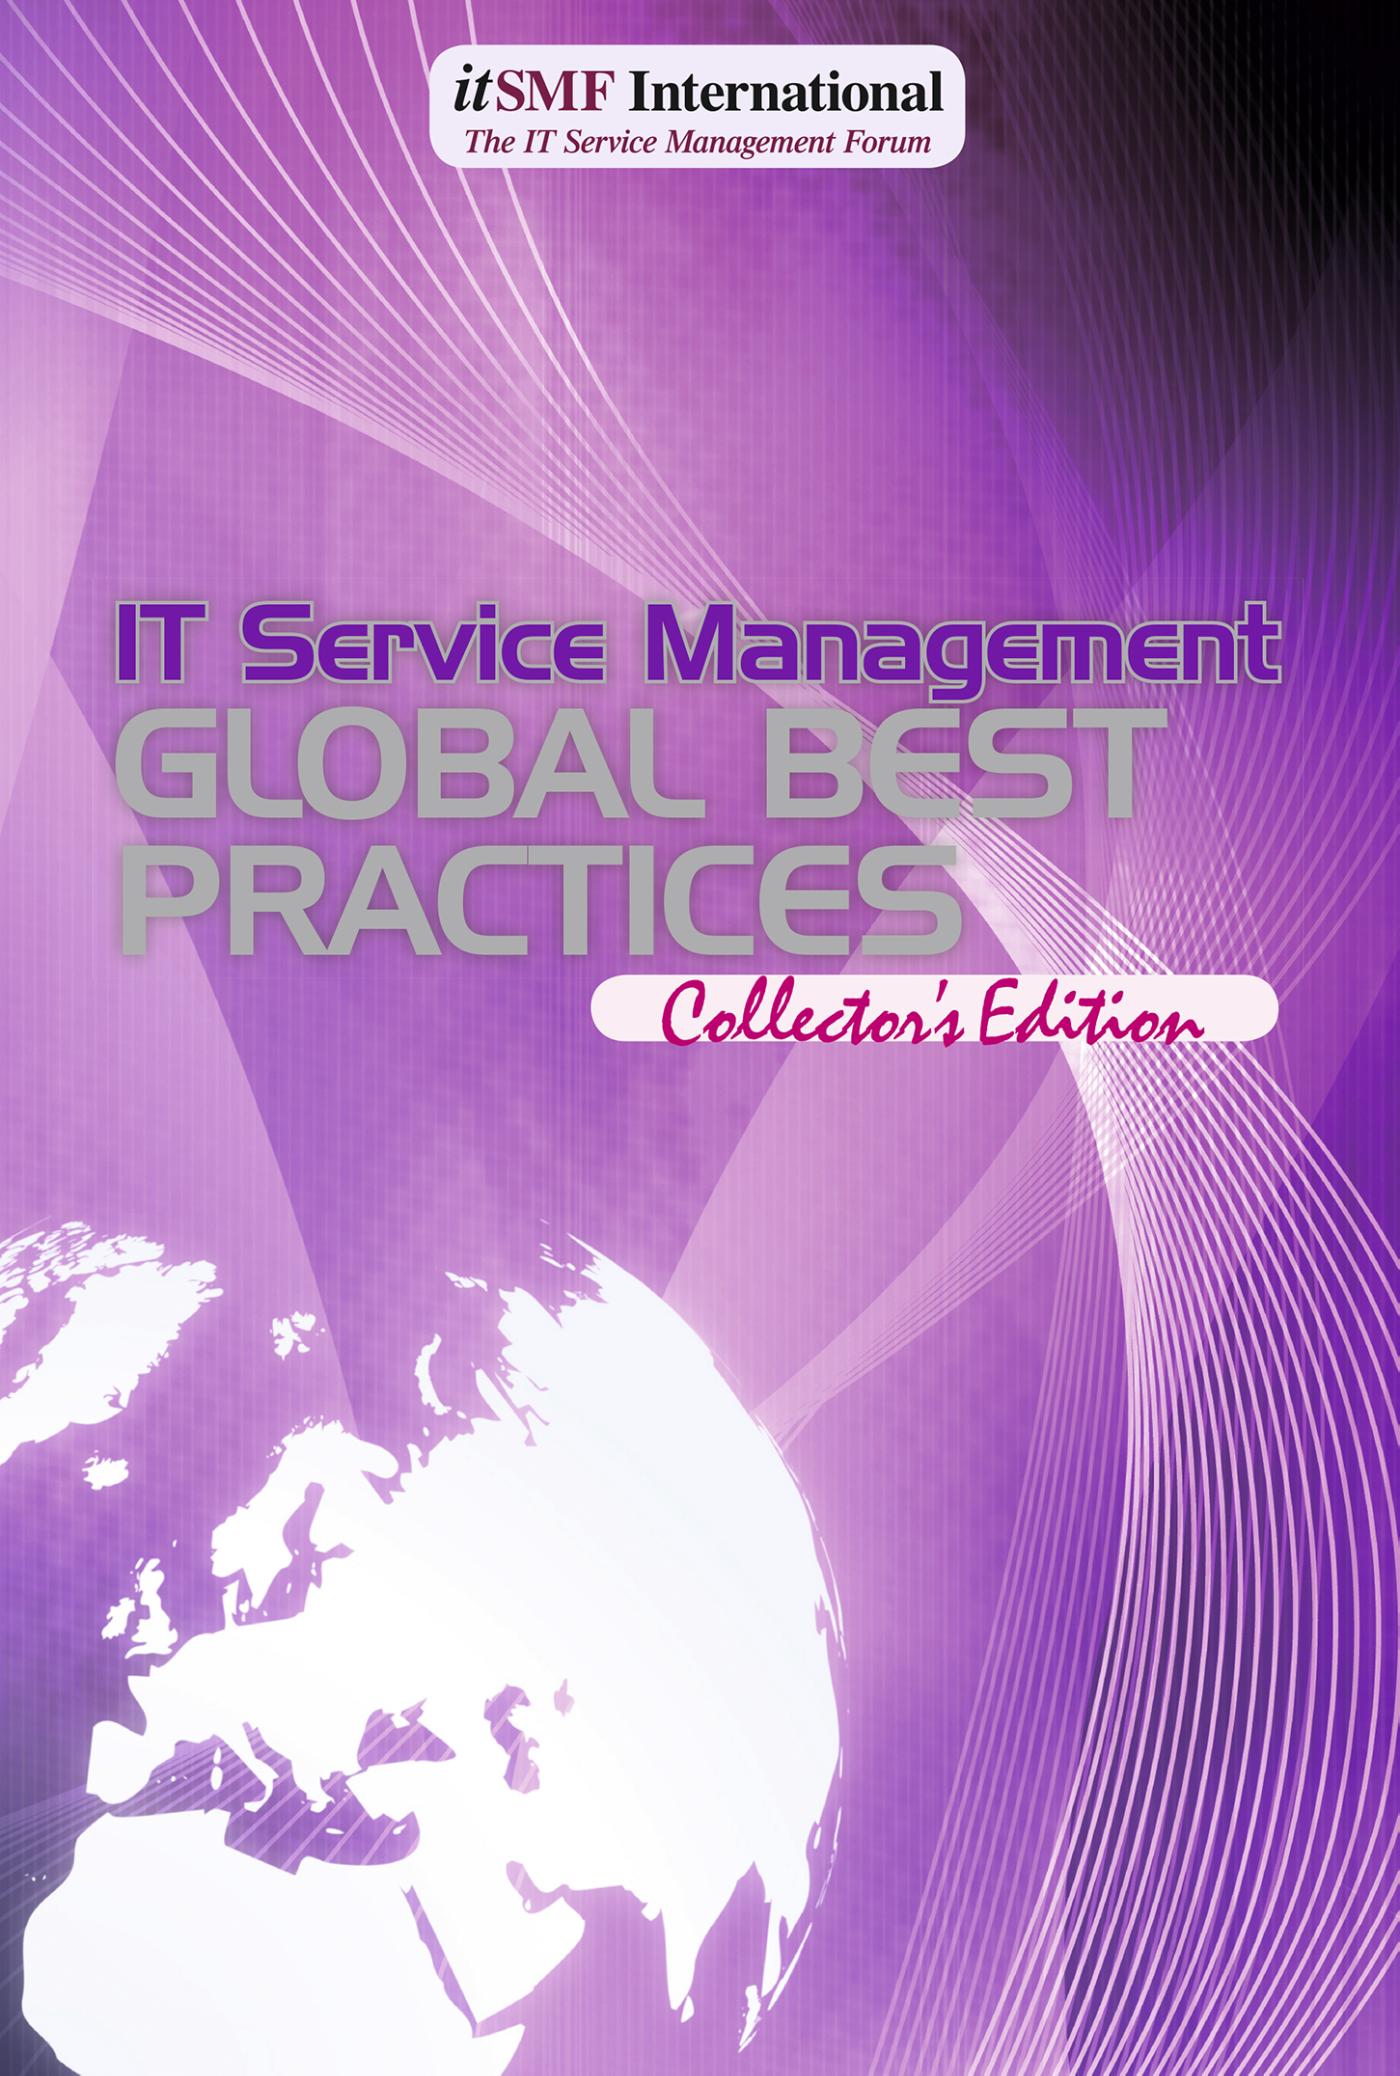 Global best practices (Ebook)